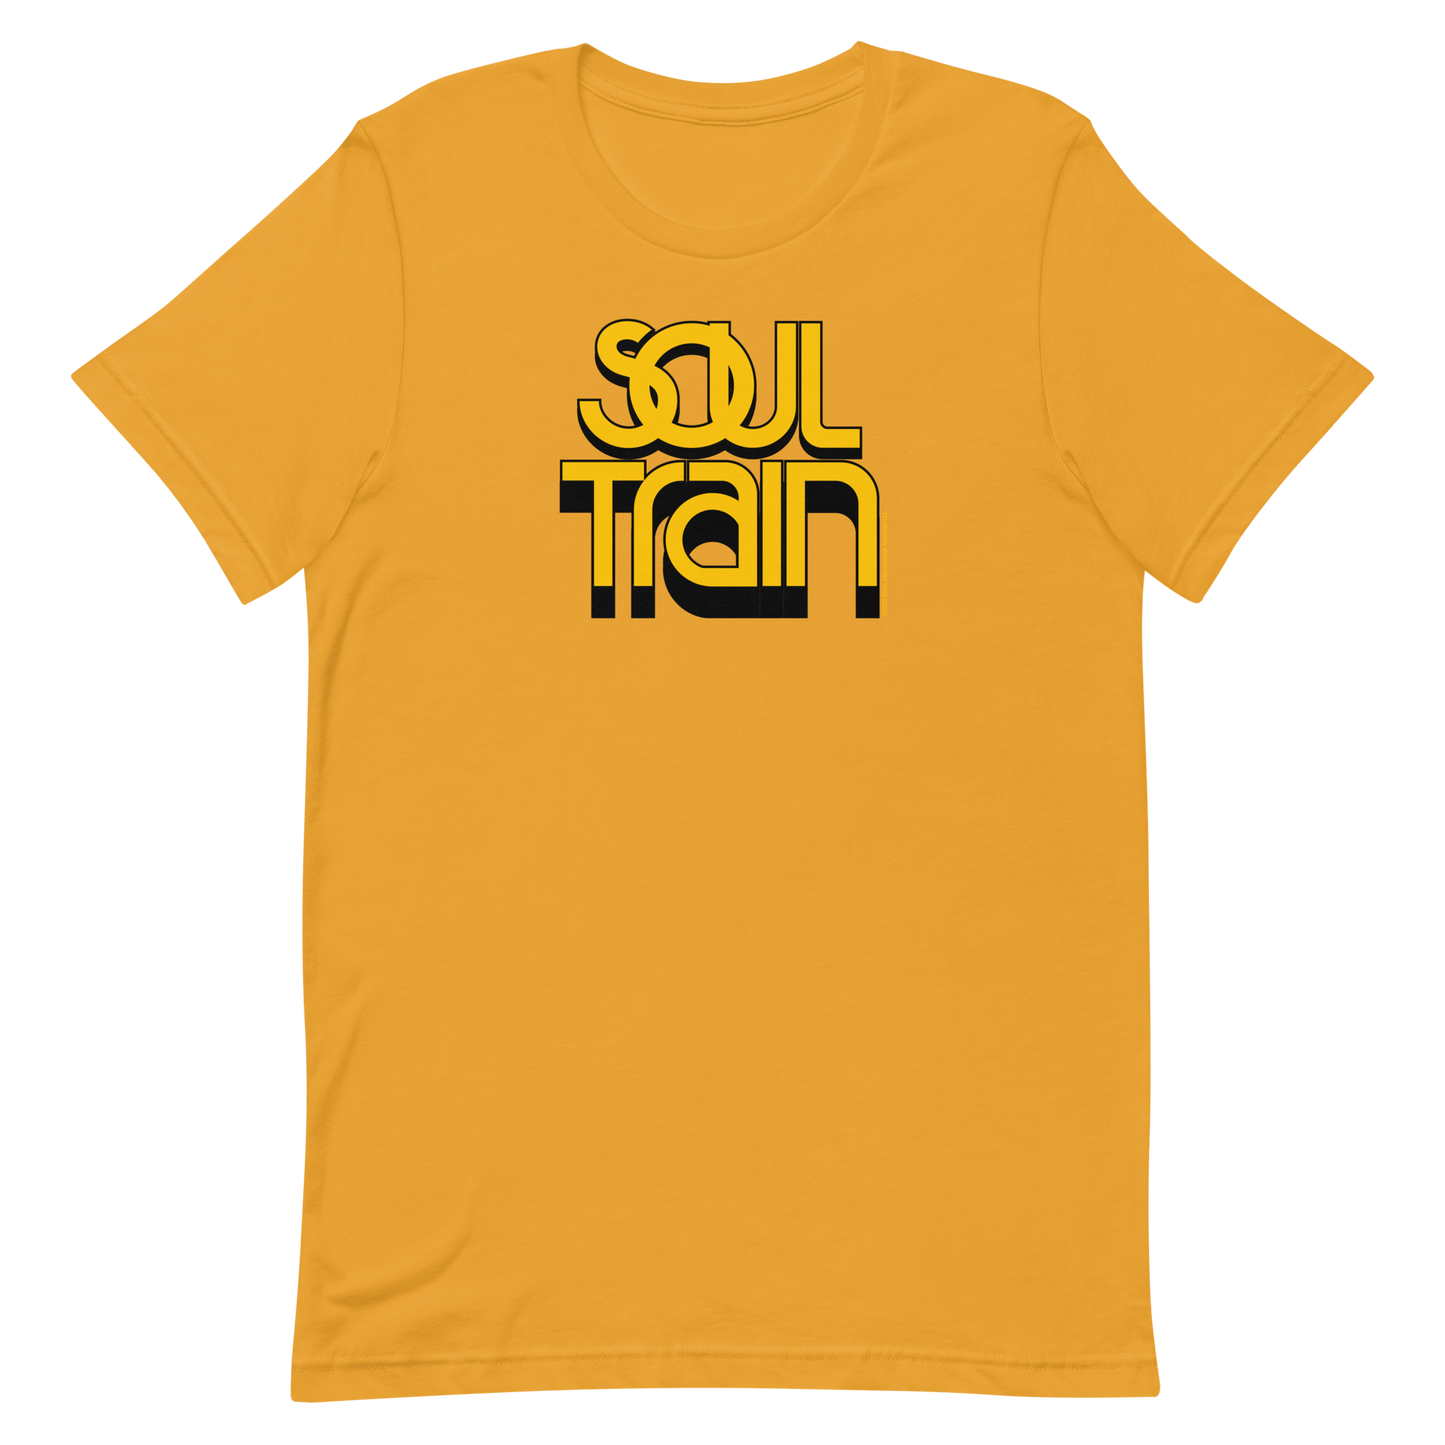 Soul Train Logo Unisex Premium T-Shirt